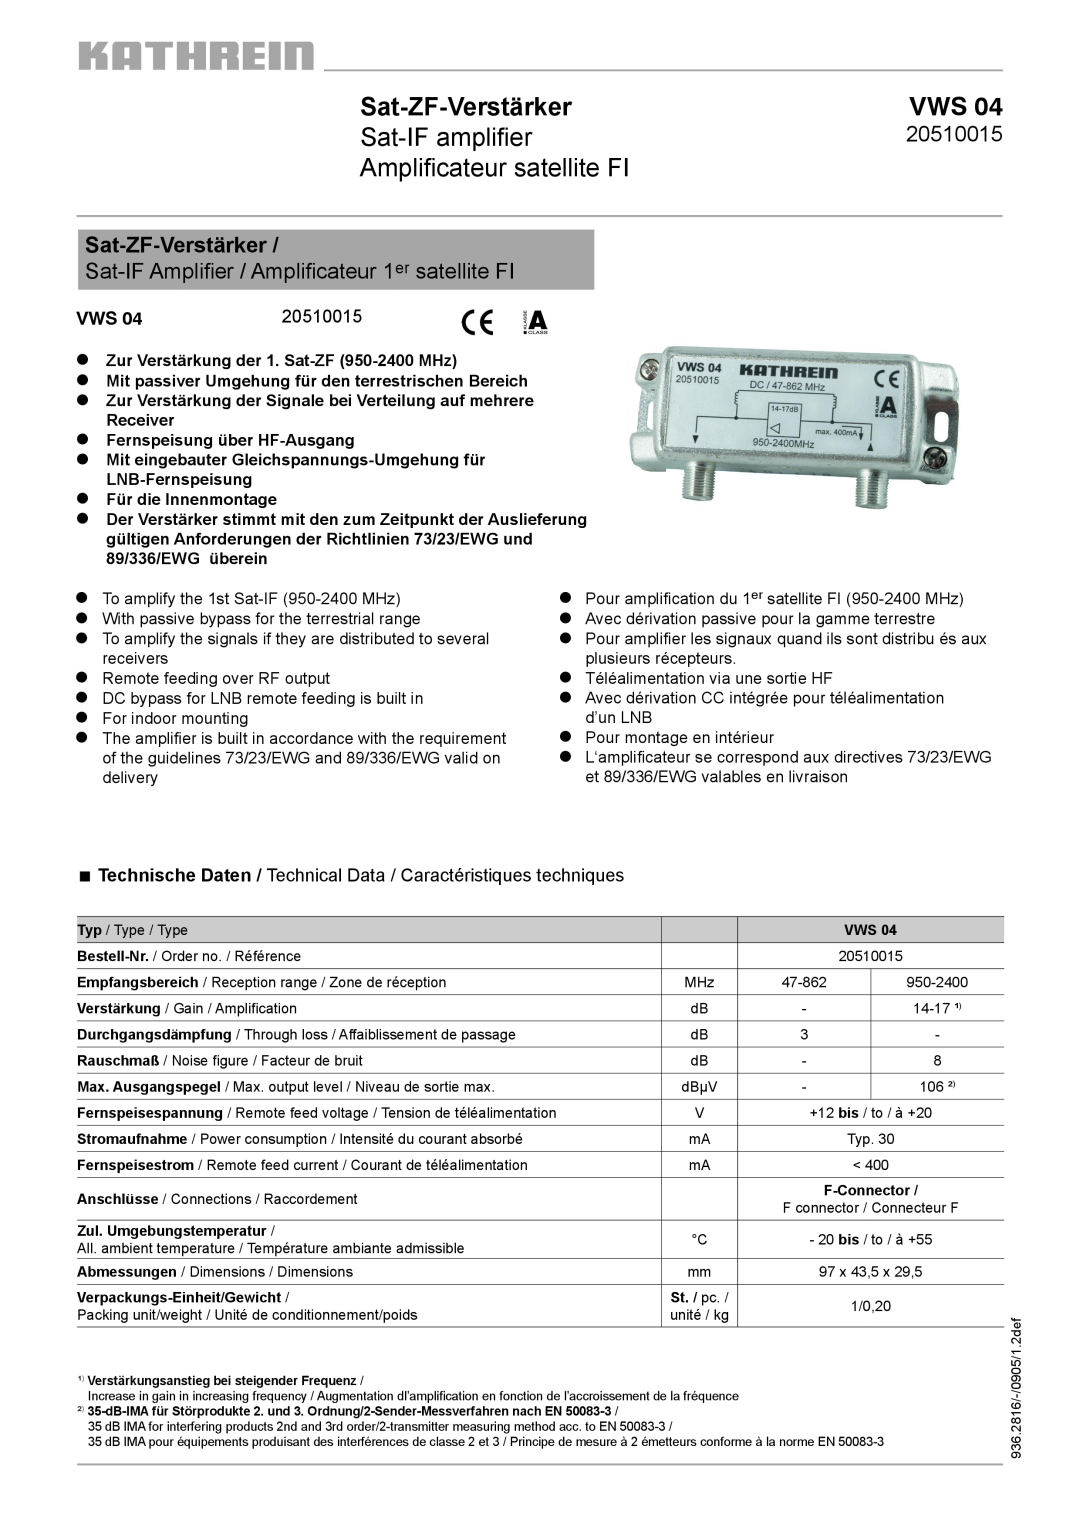 Kathrein VWS 04 dimensions Sat-ZF-Verstärker, Sat-IFampliﬁ er, Ampliﬁ cateur satellite FI, 20510015 